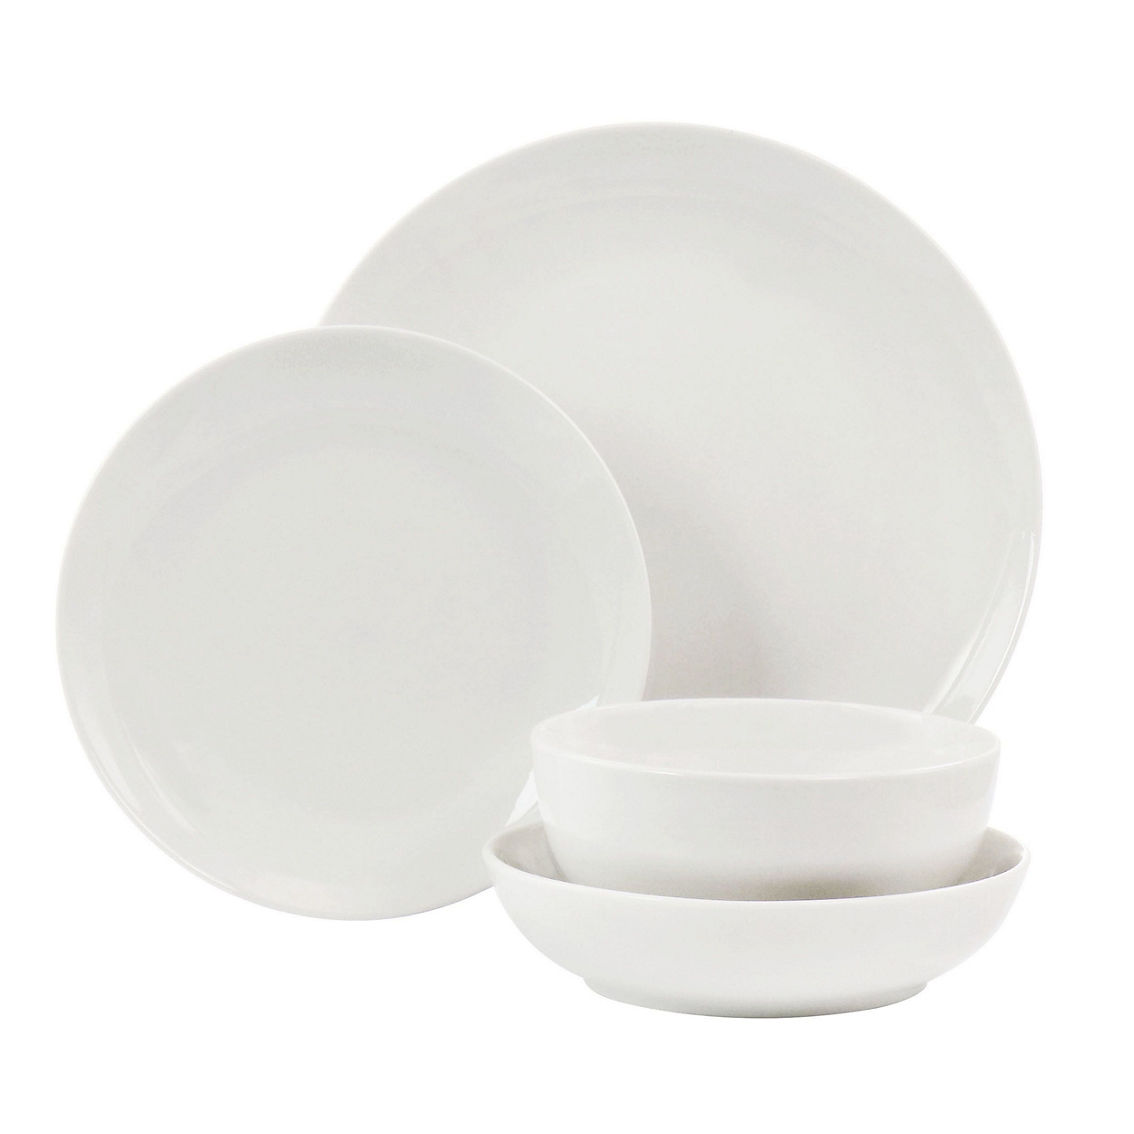 Elama Camellia 16 Piece Porcelain Double Bowl Dinnerware Set - Image 2 of 5